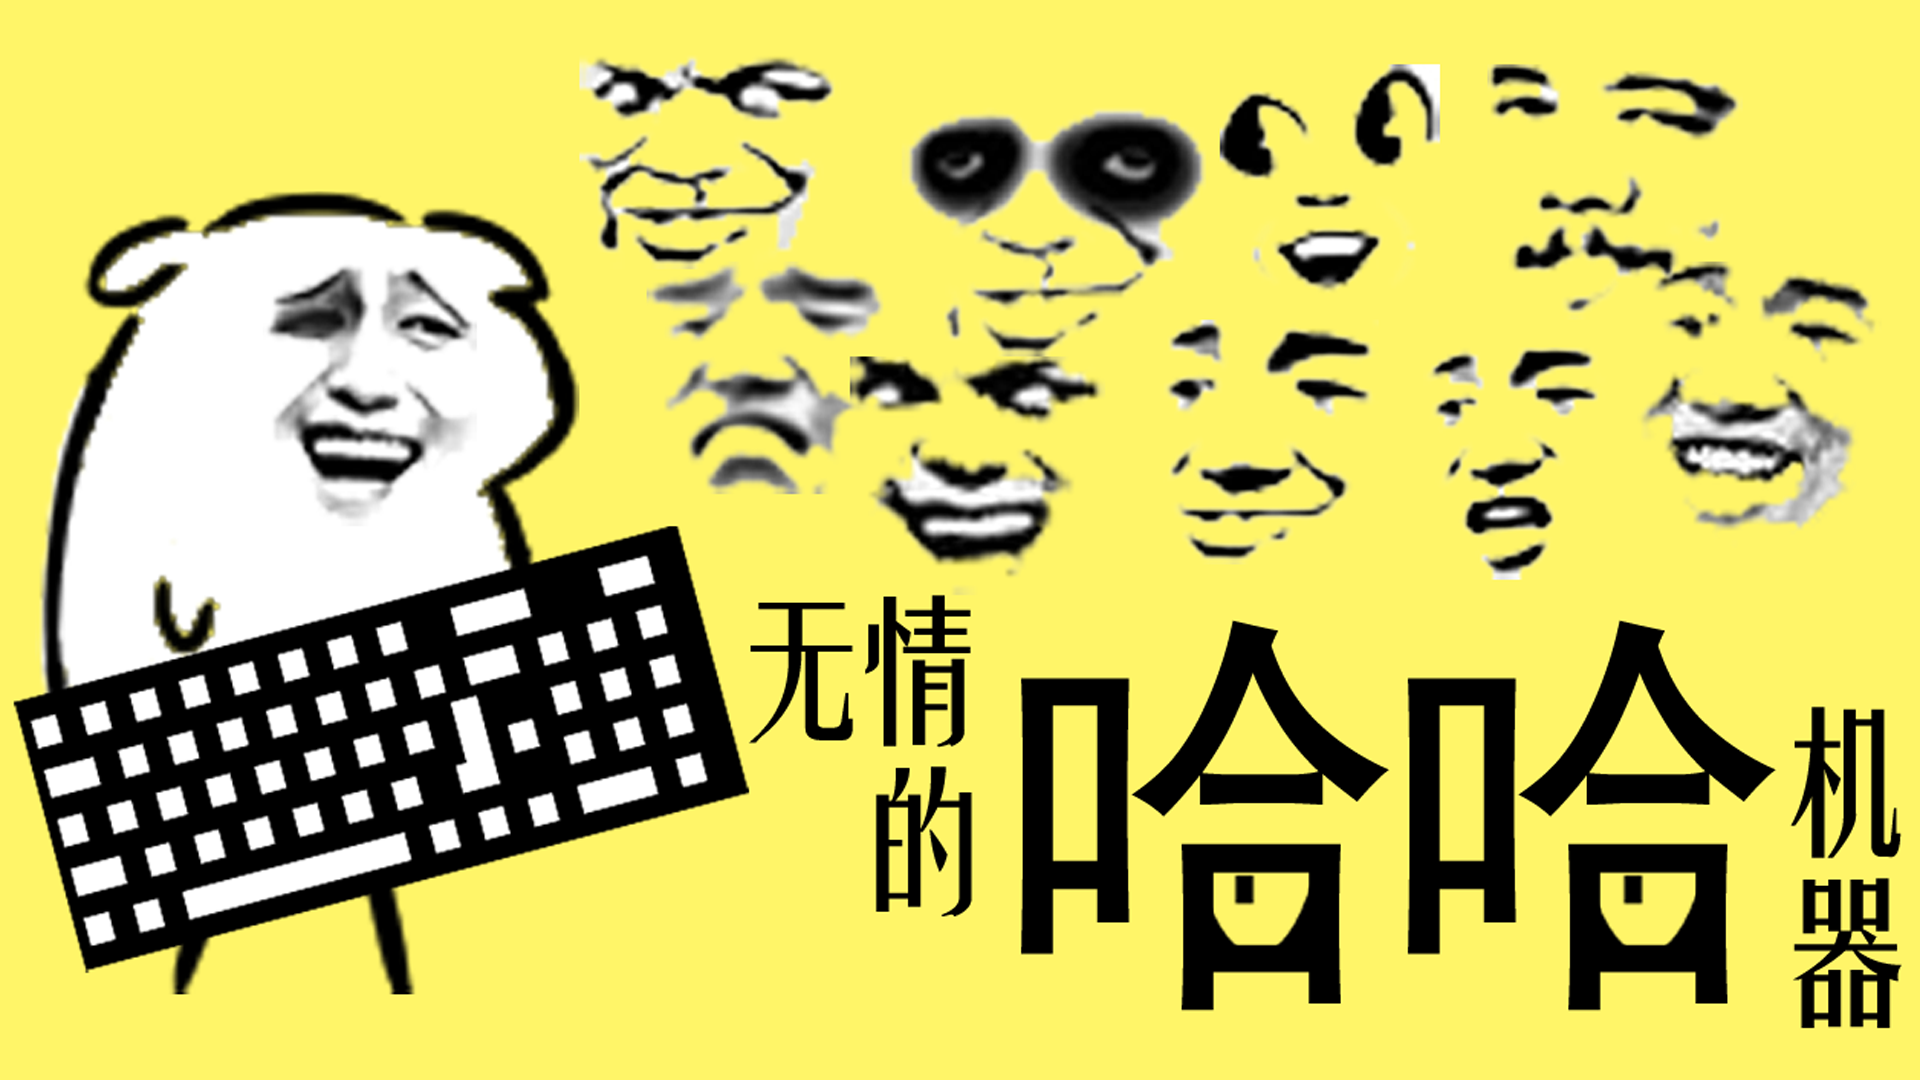 Banner of 無情的哈哈機器 0.7